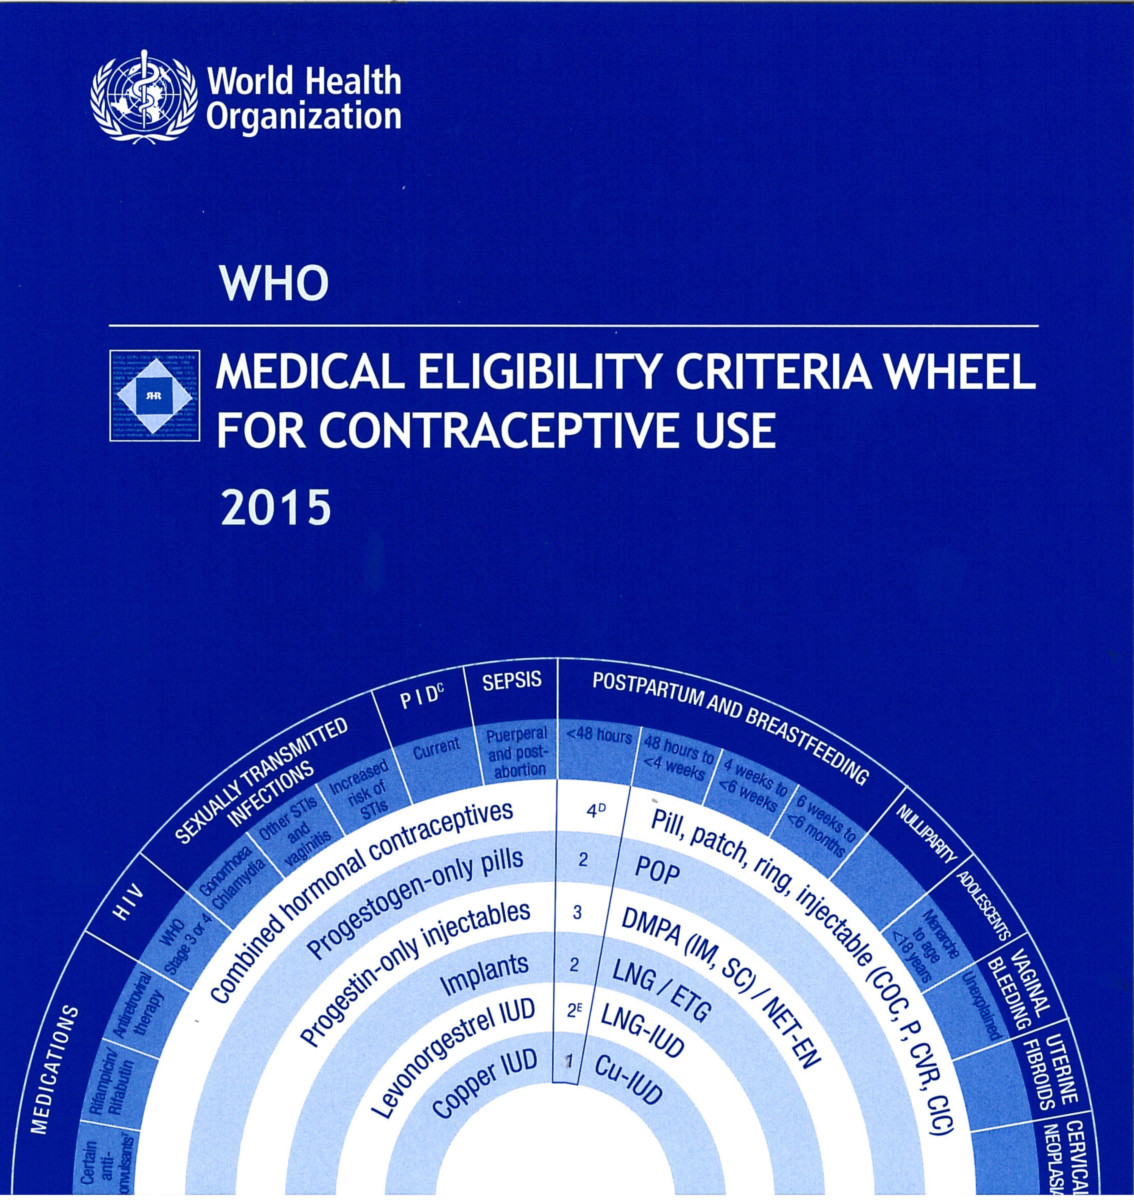 WHO Medical Eligibility Criteria Wheel for Contraceptive Use